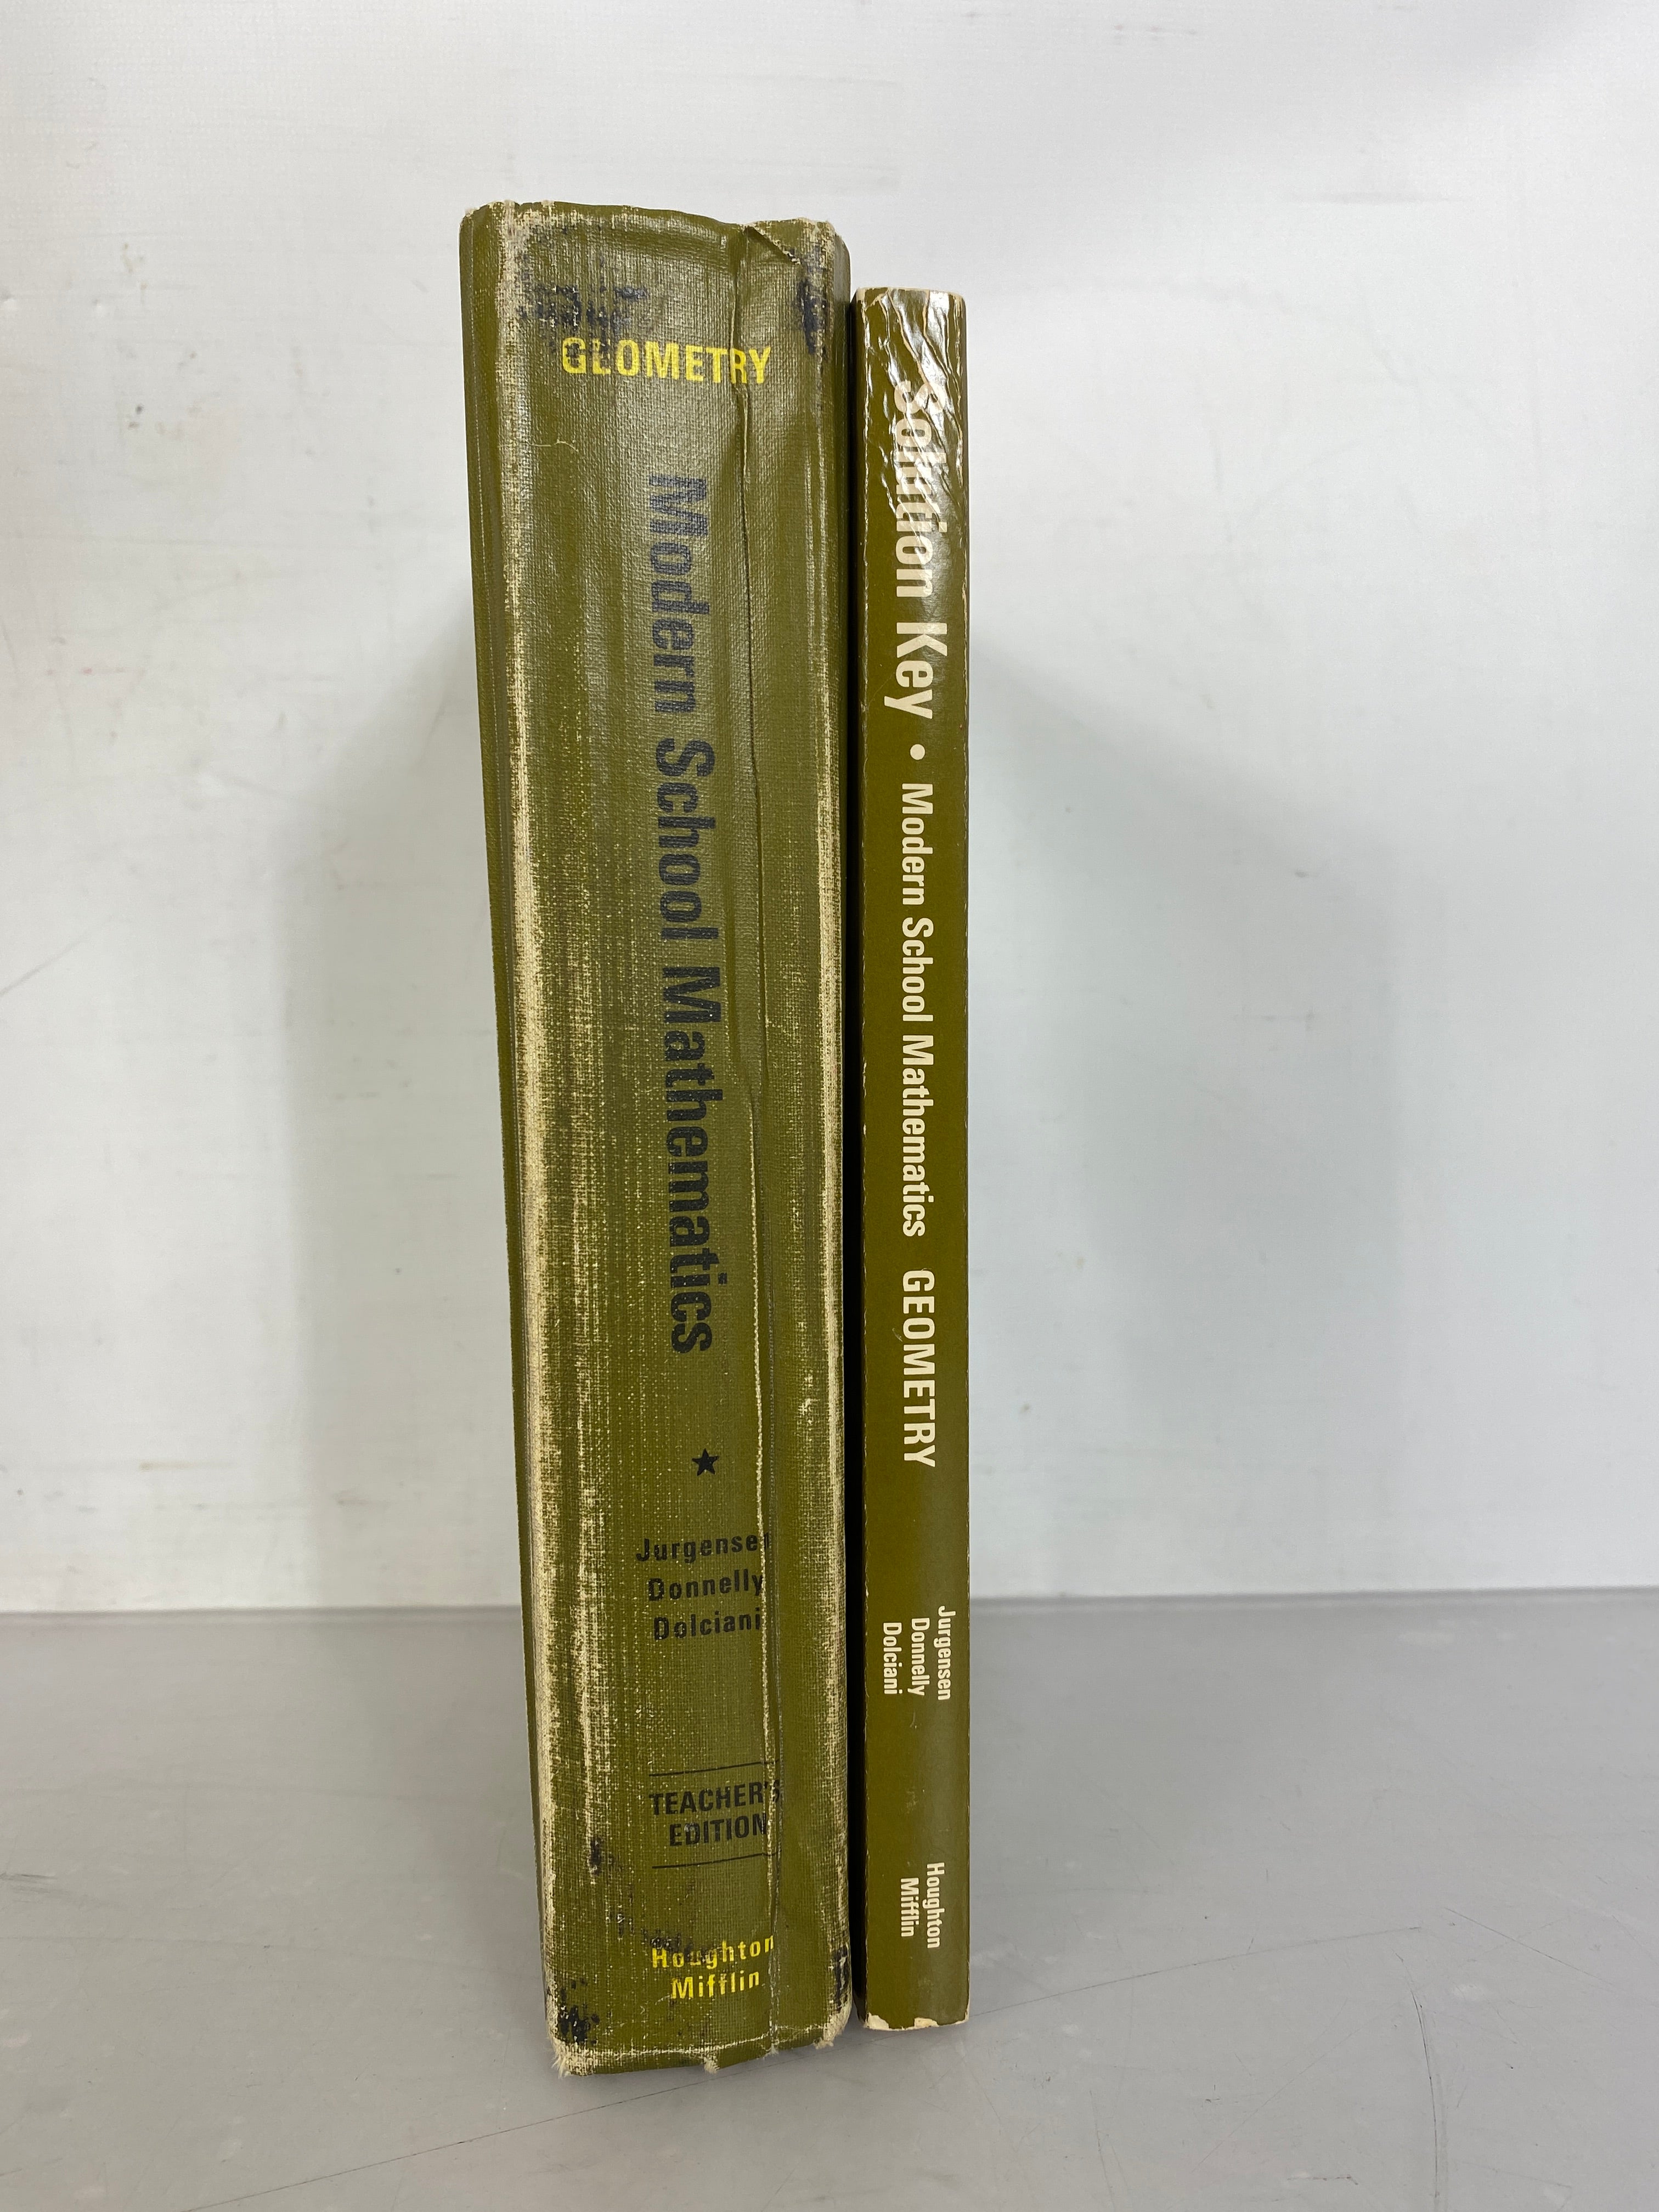 2 Volume Set Modern School Mathematics Geometry Textbook With Teacher's Manual and Solution Key (1972)